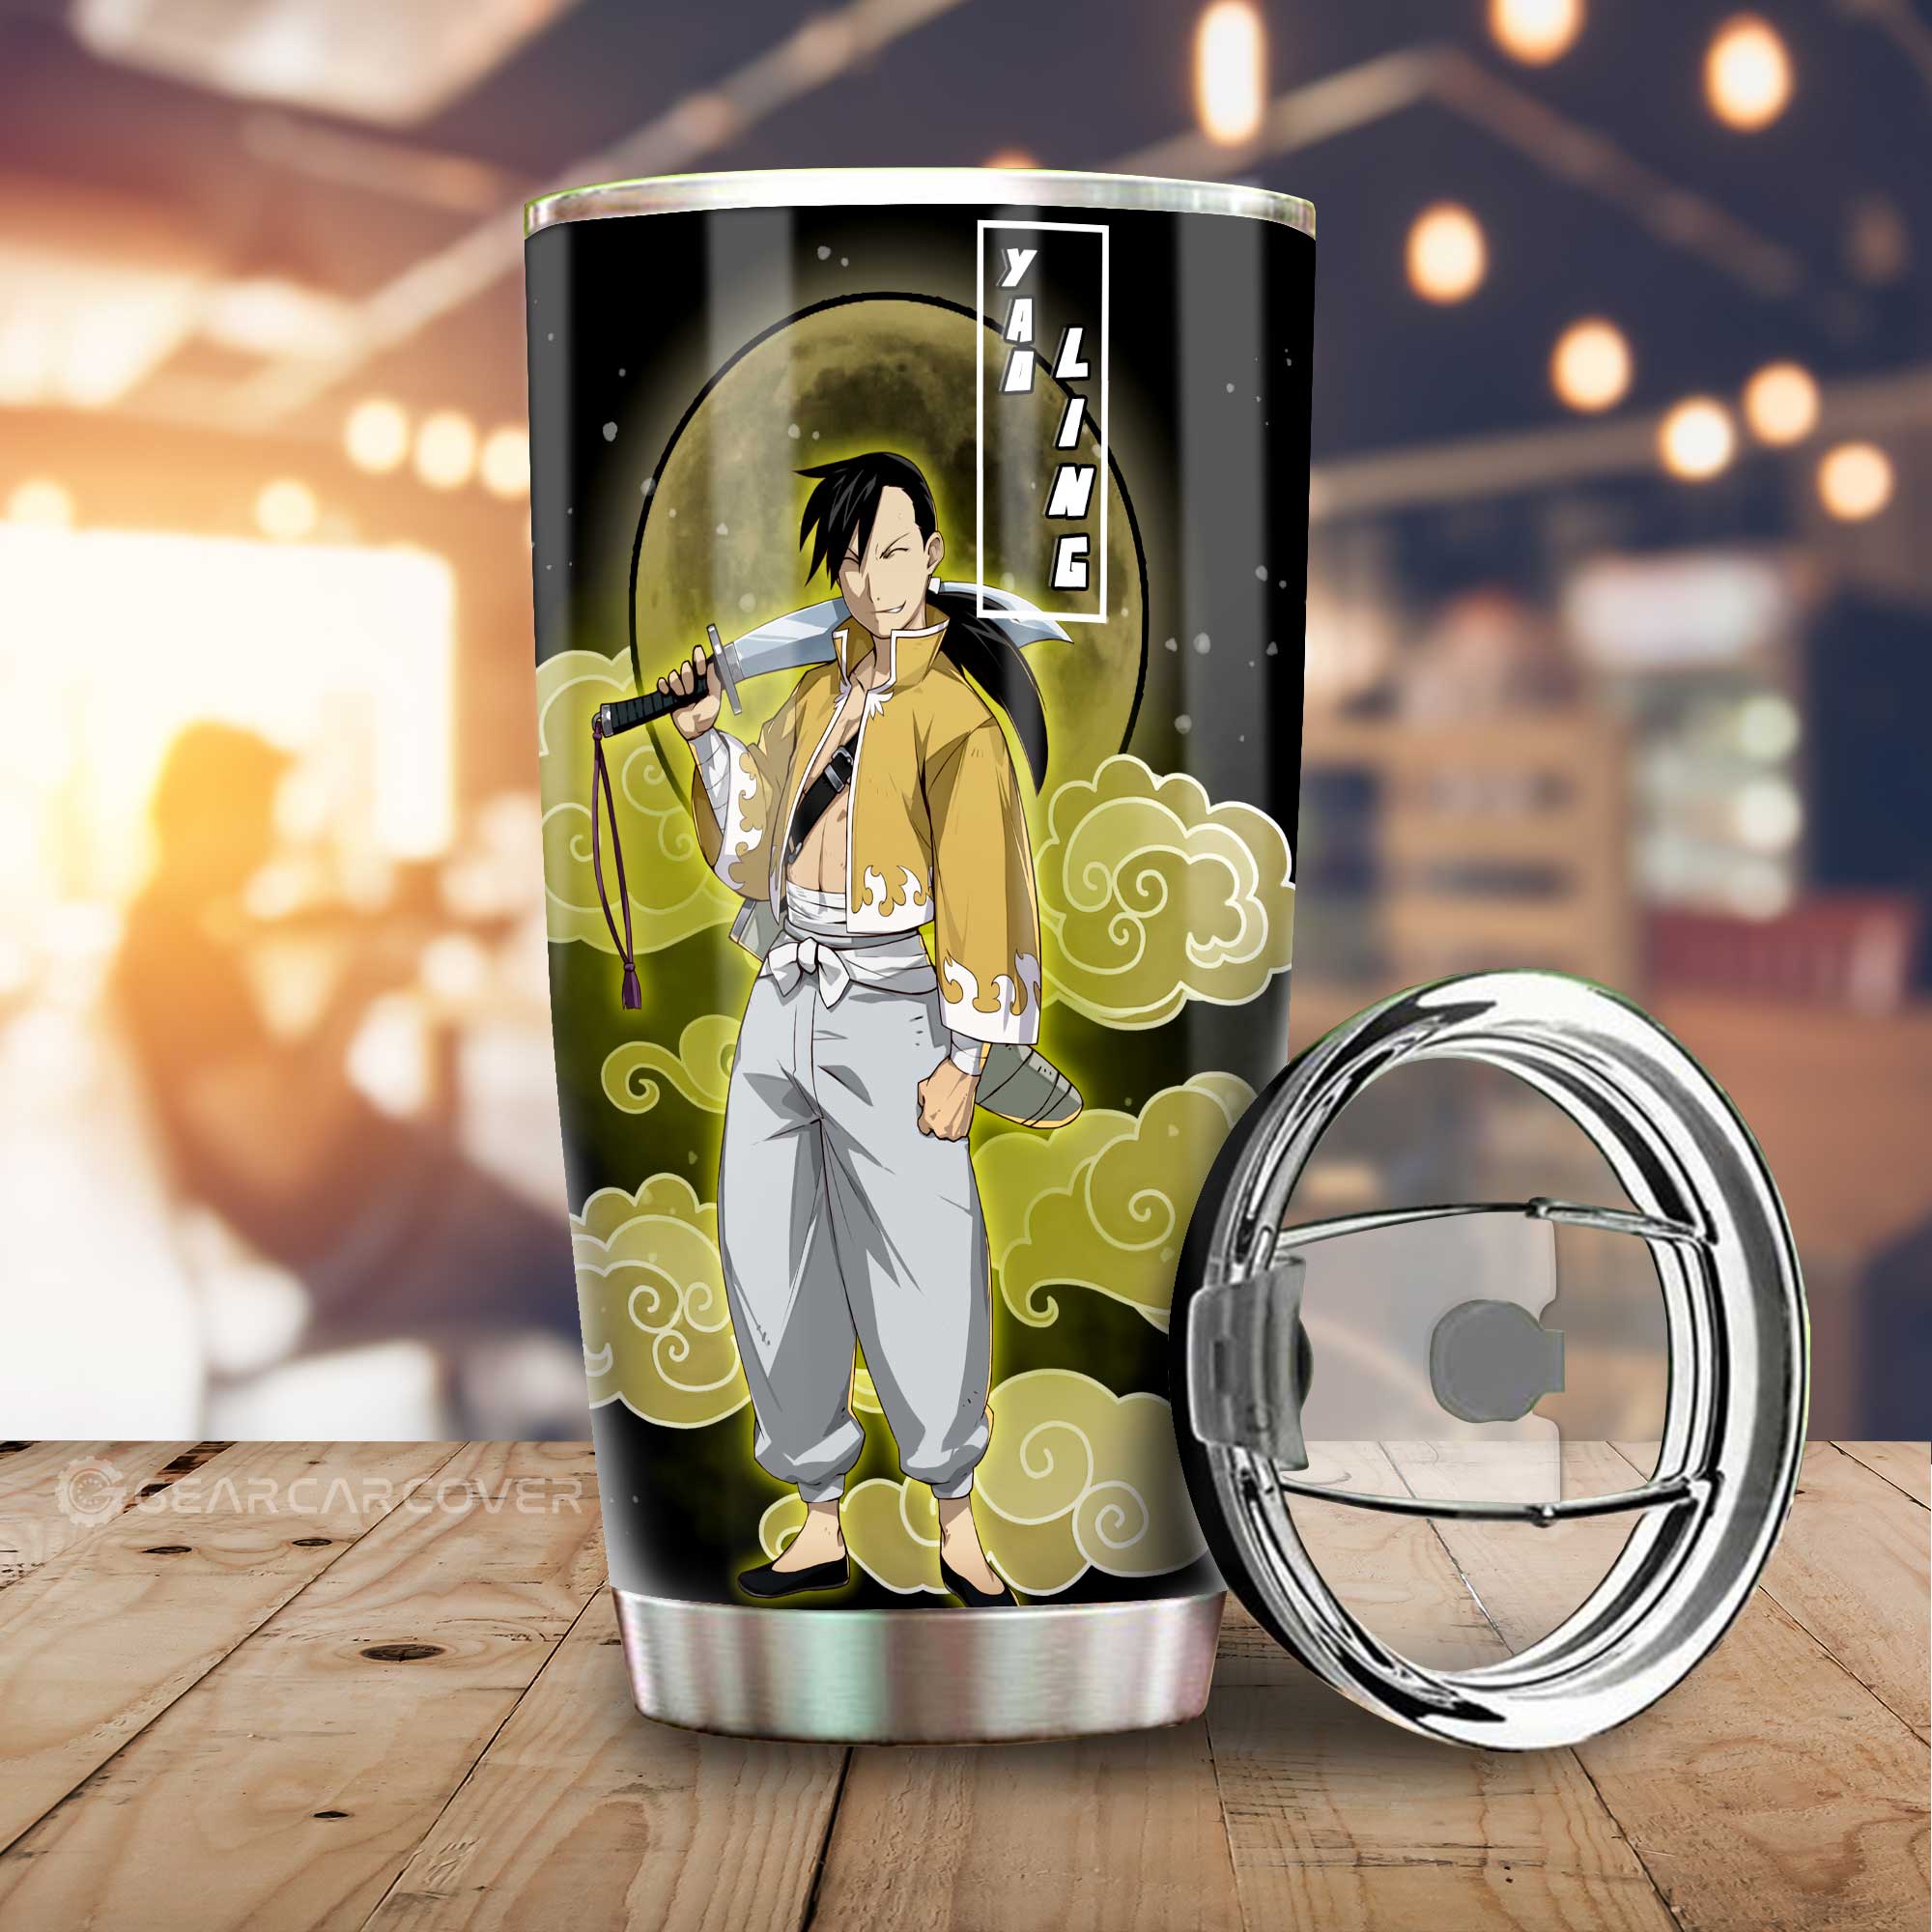 Ling Yao Tumbler Cup Custom Anime Fullmetal Alchemist Car Interior Accessories - Gearcarcover - 1